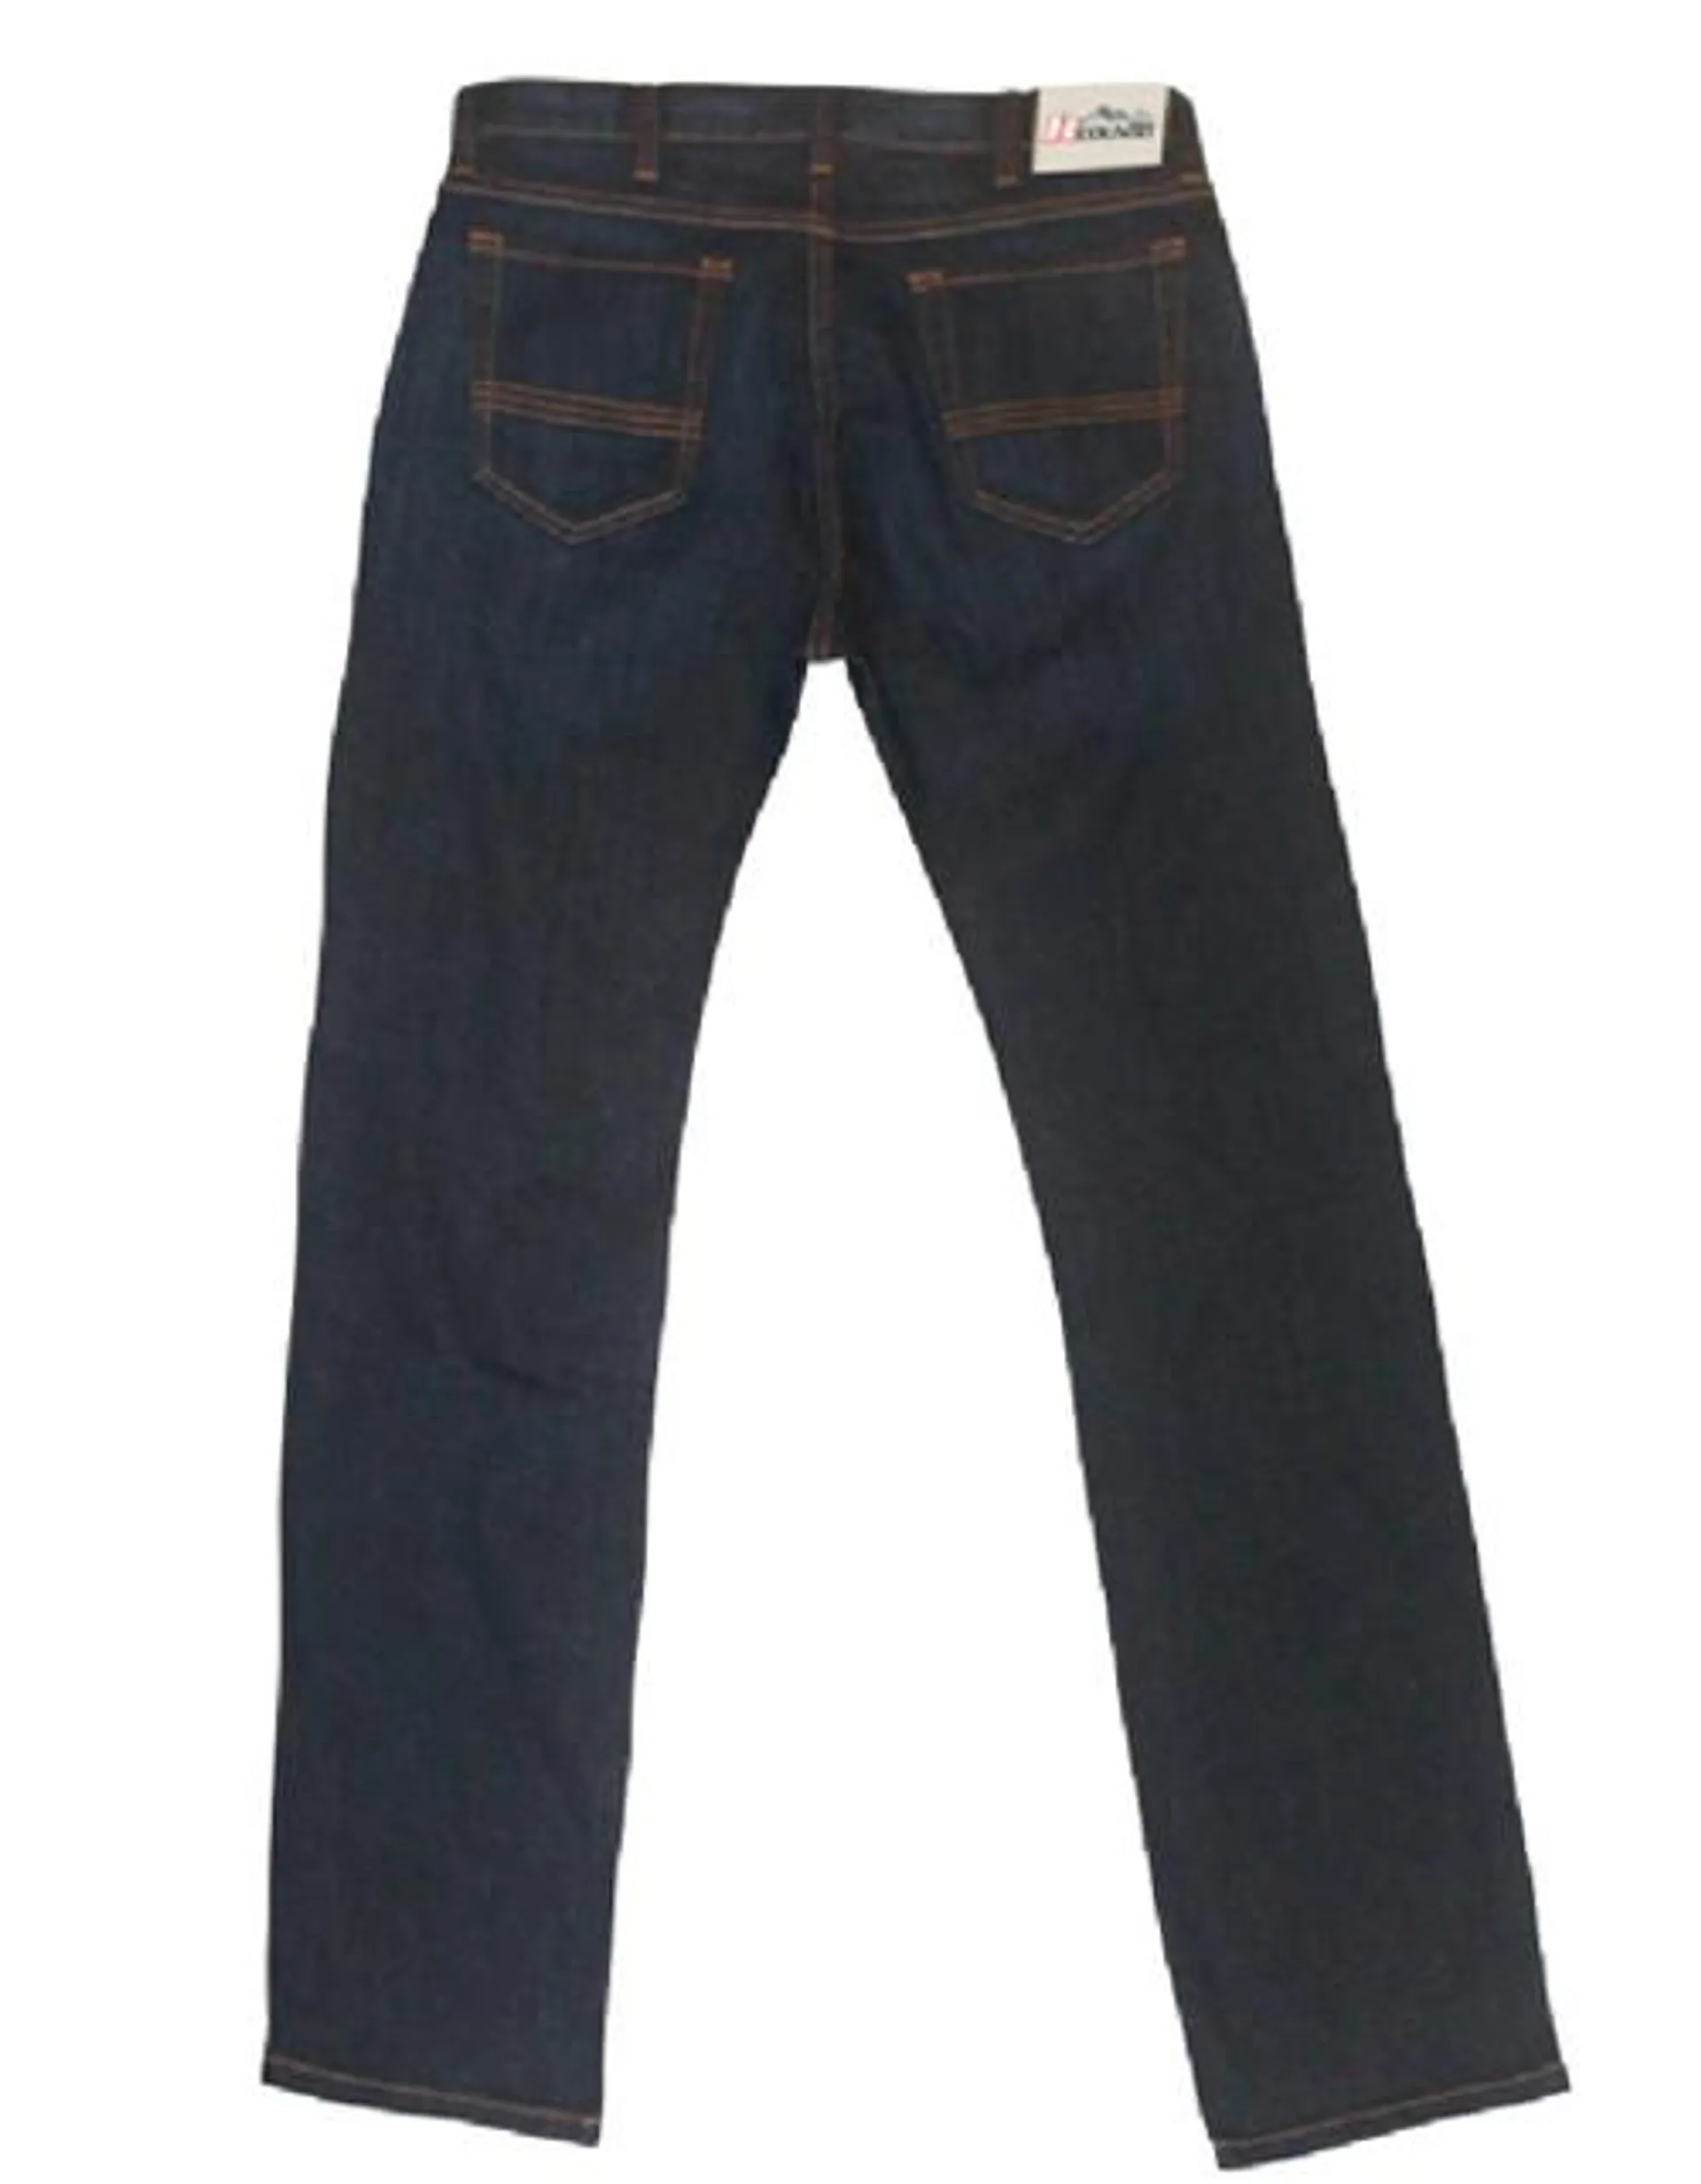 RCountry Mens Dark Wash 5 Pocket Jeans